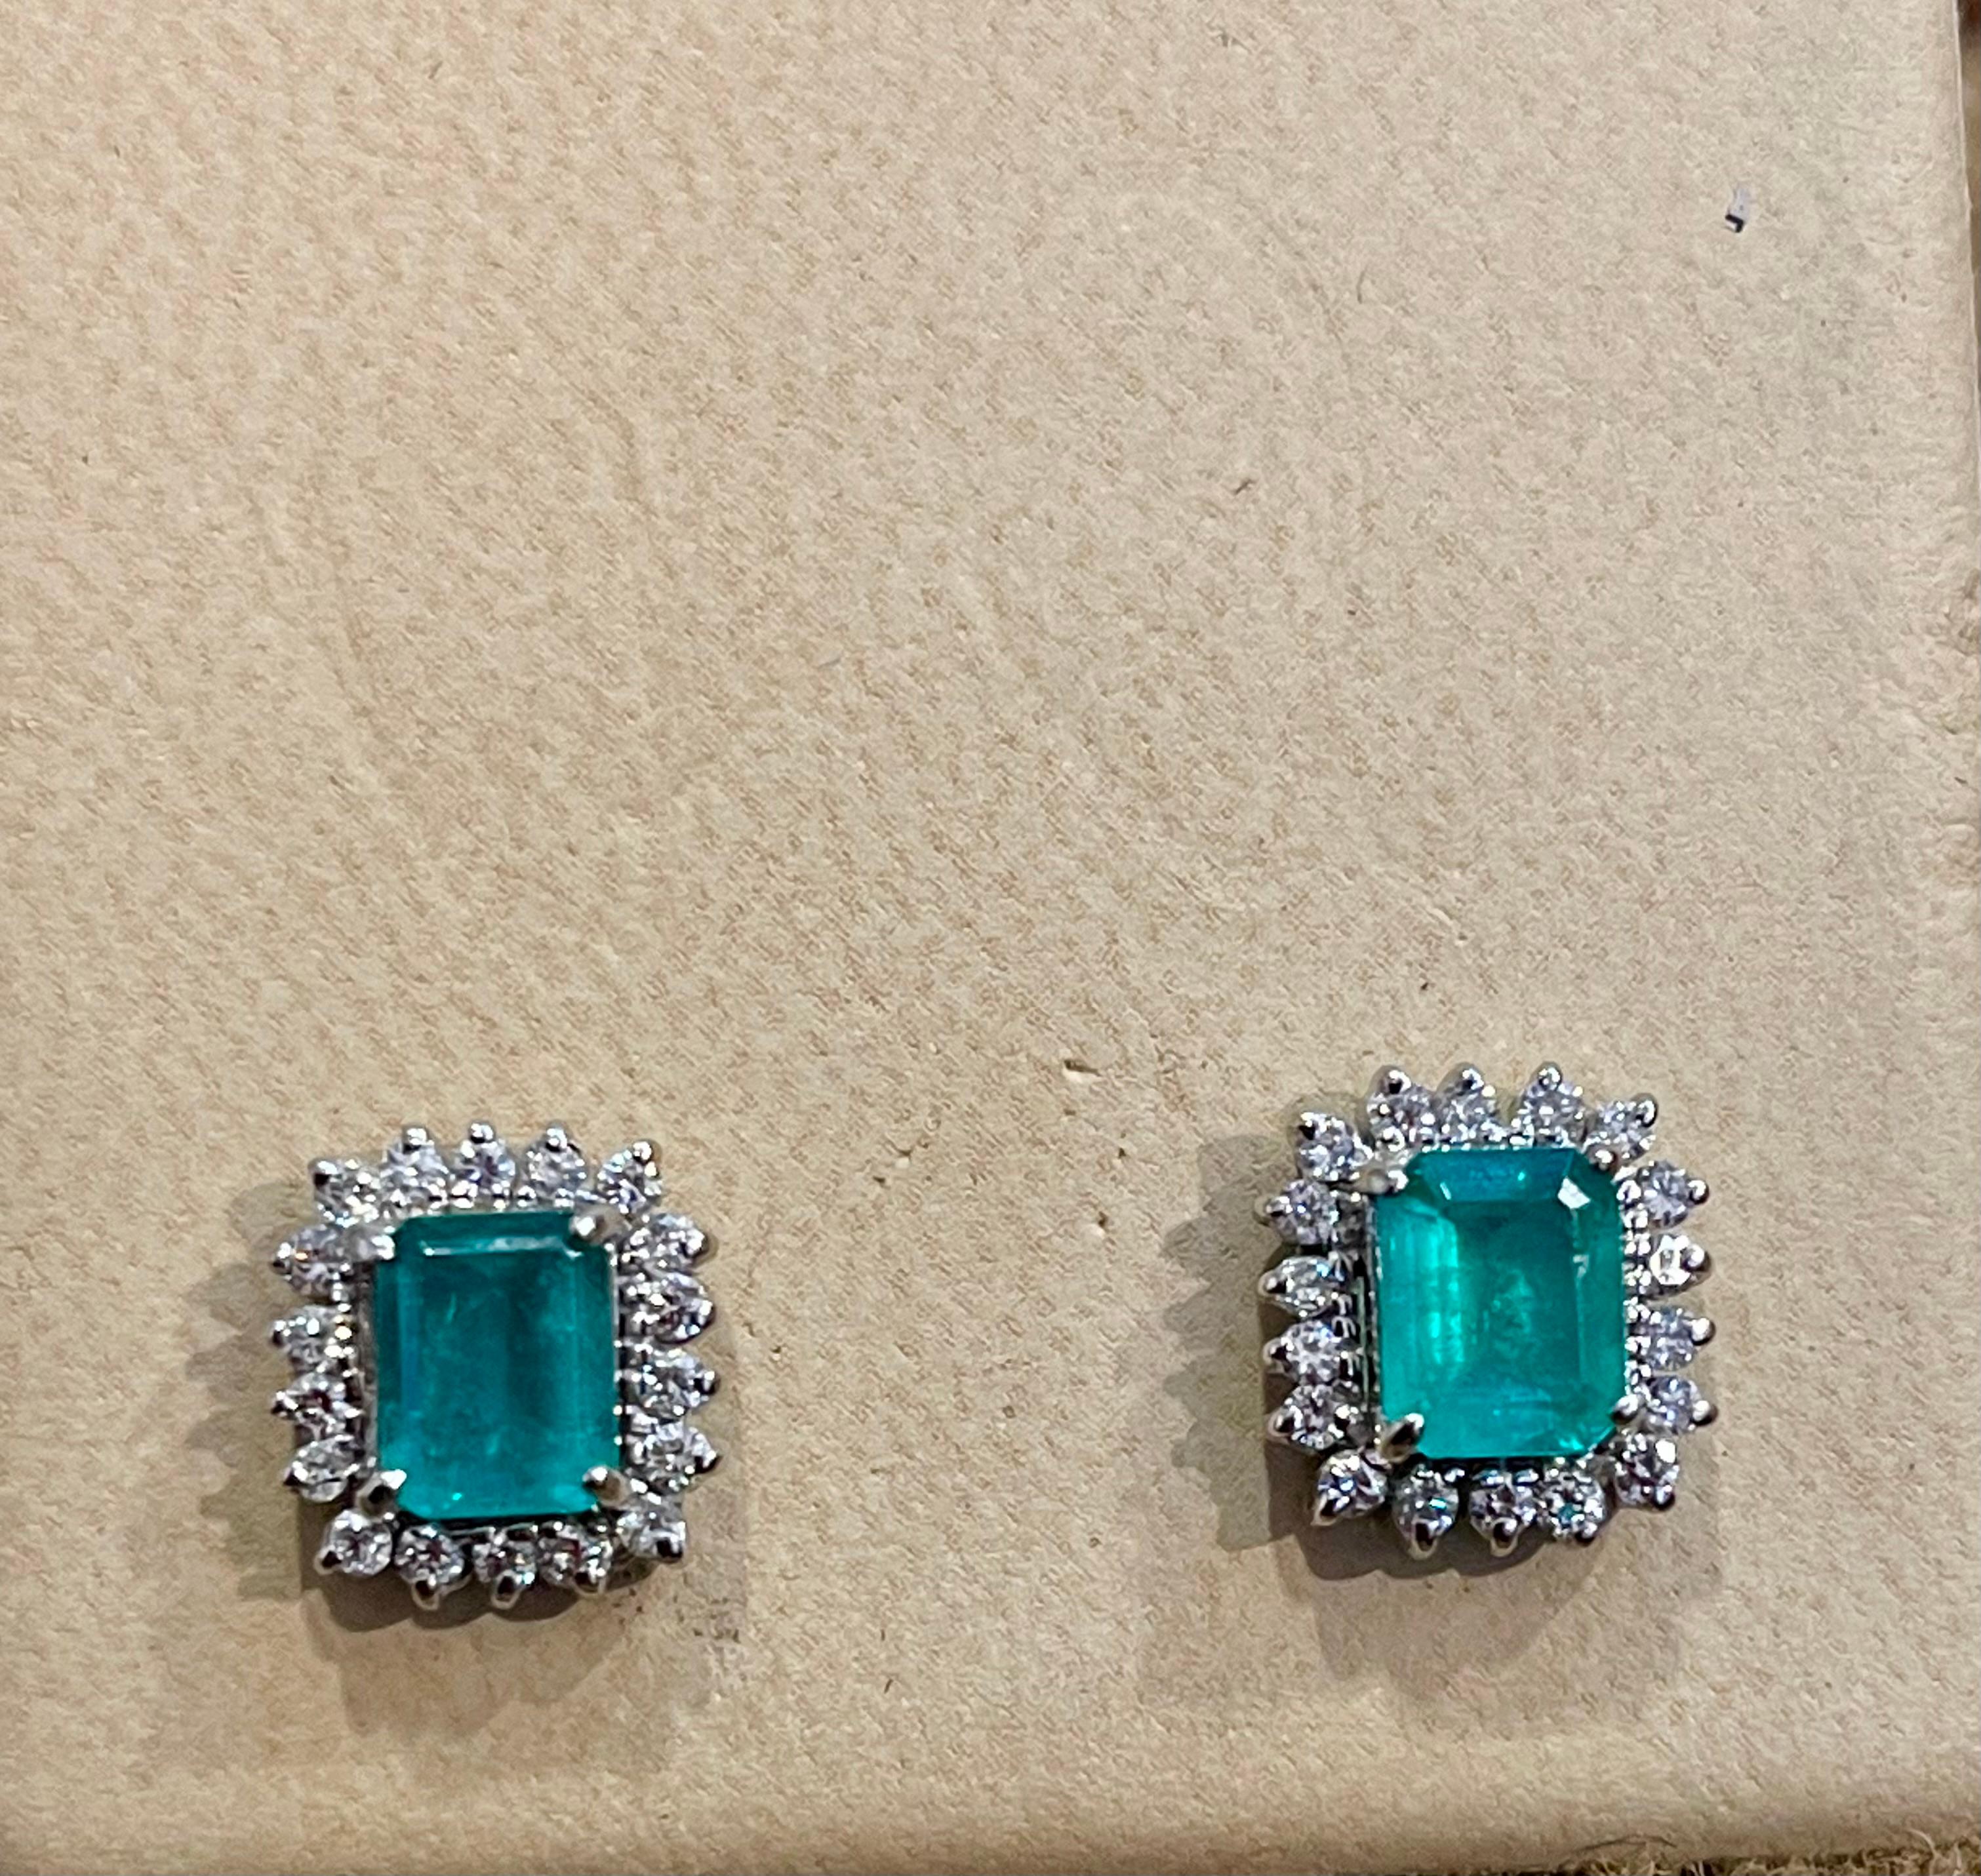 2. 25 Ct Colombian Emerald Cut Emerald & Diamond Earrings 18 Karat White Gold 9